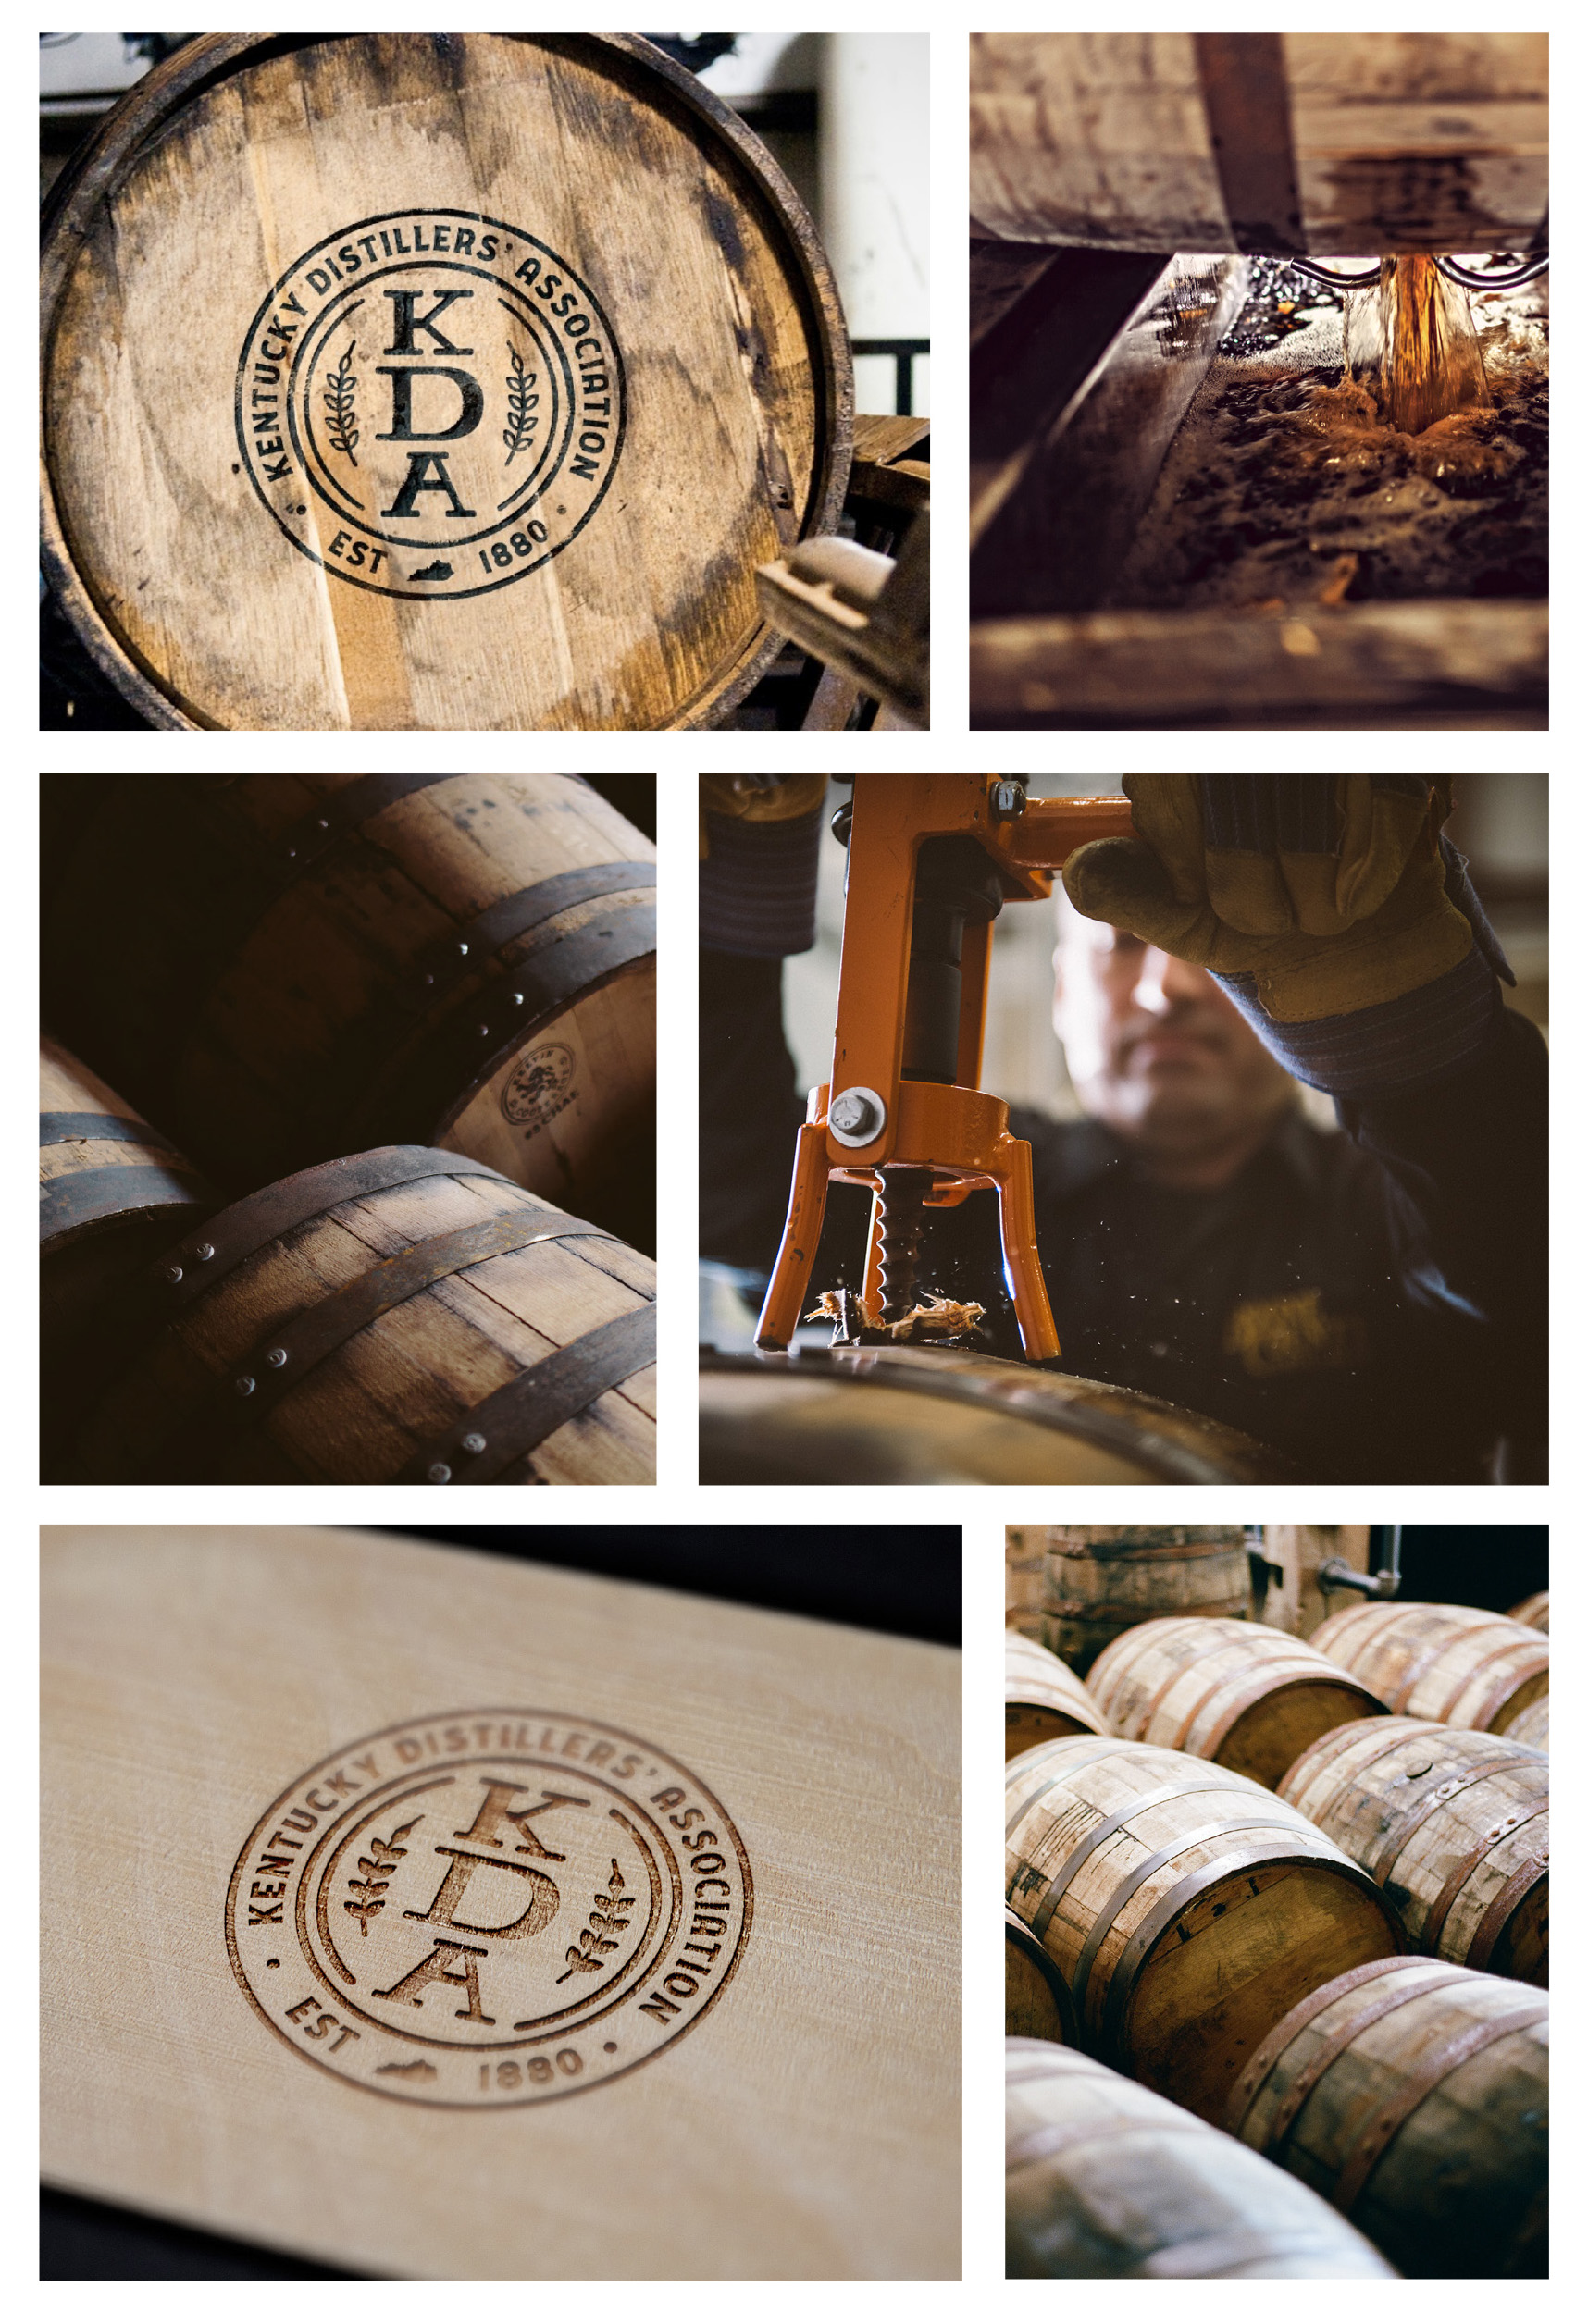 Photos of the KDA logo burned or carved in bourbon barrels